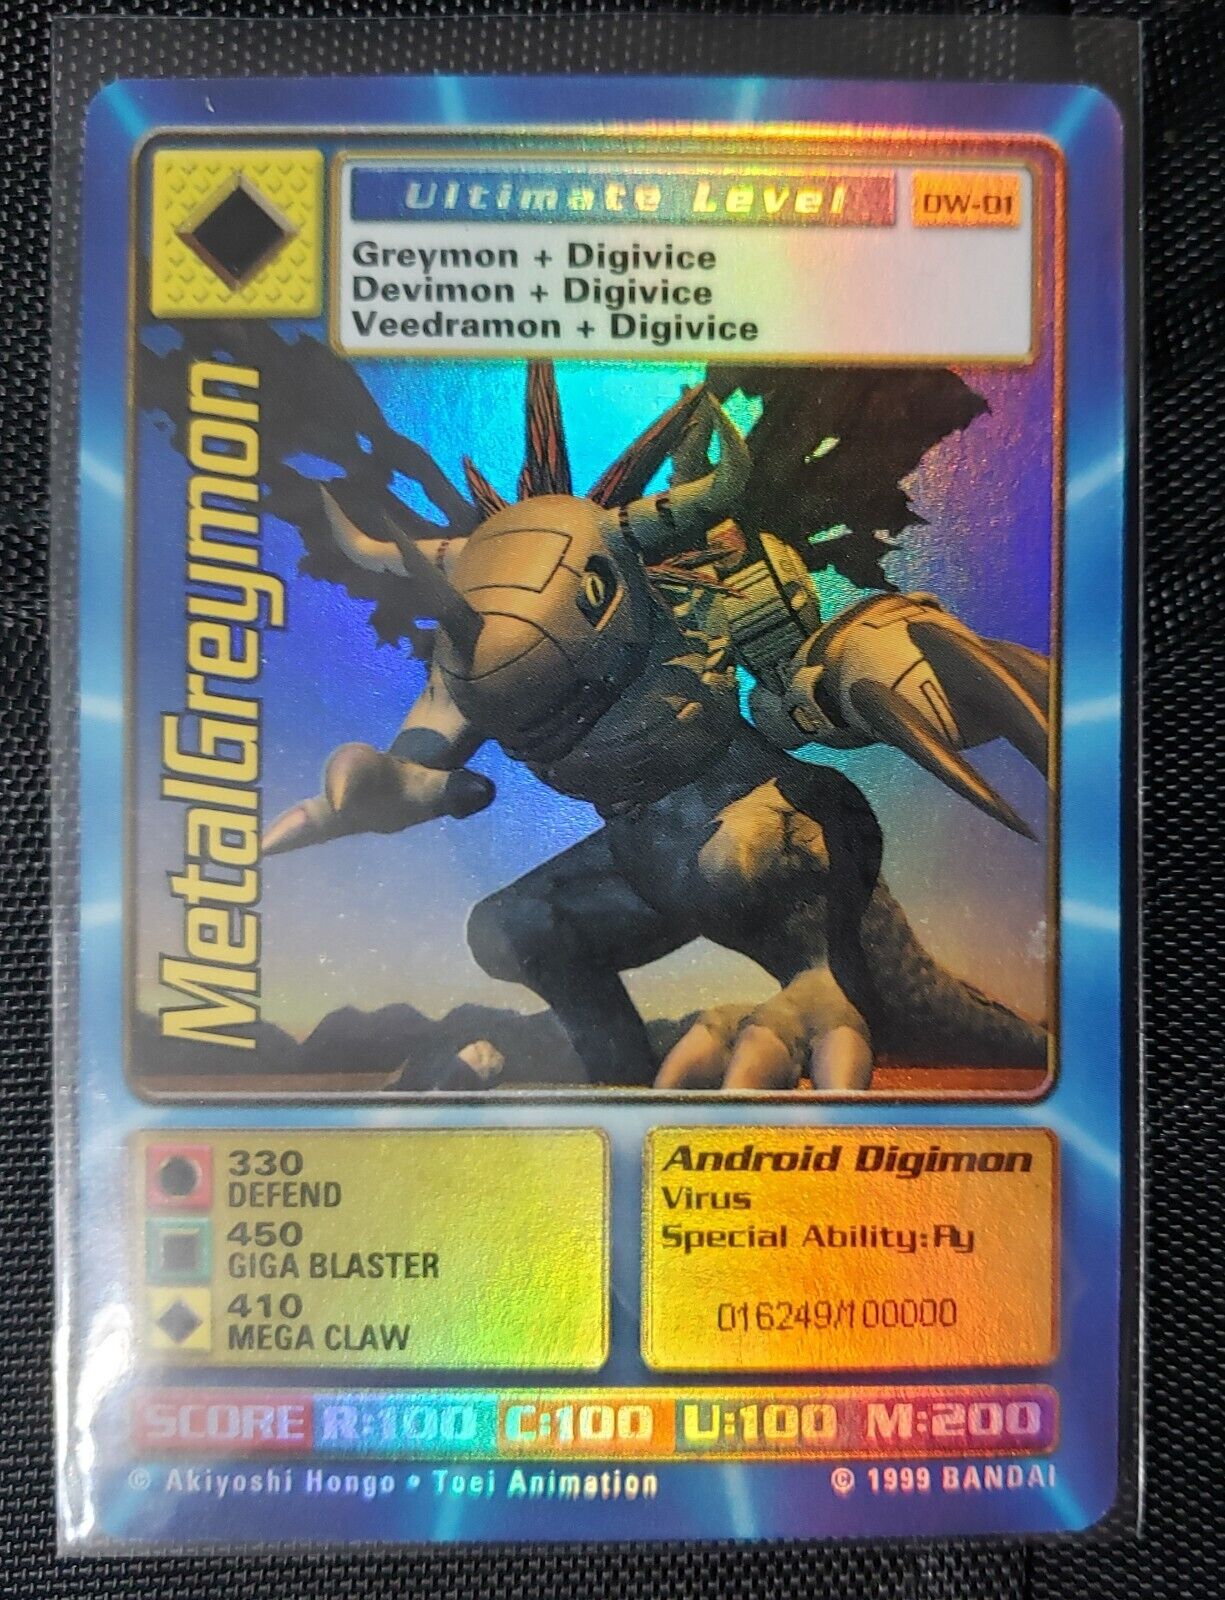 Digimon World PlayStation Promo DW-01 MetalGreymon - number 016249 / 100,000